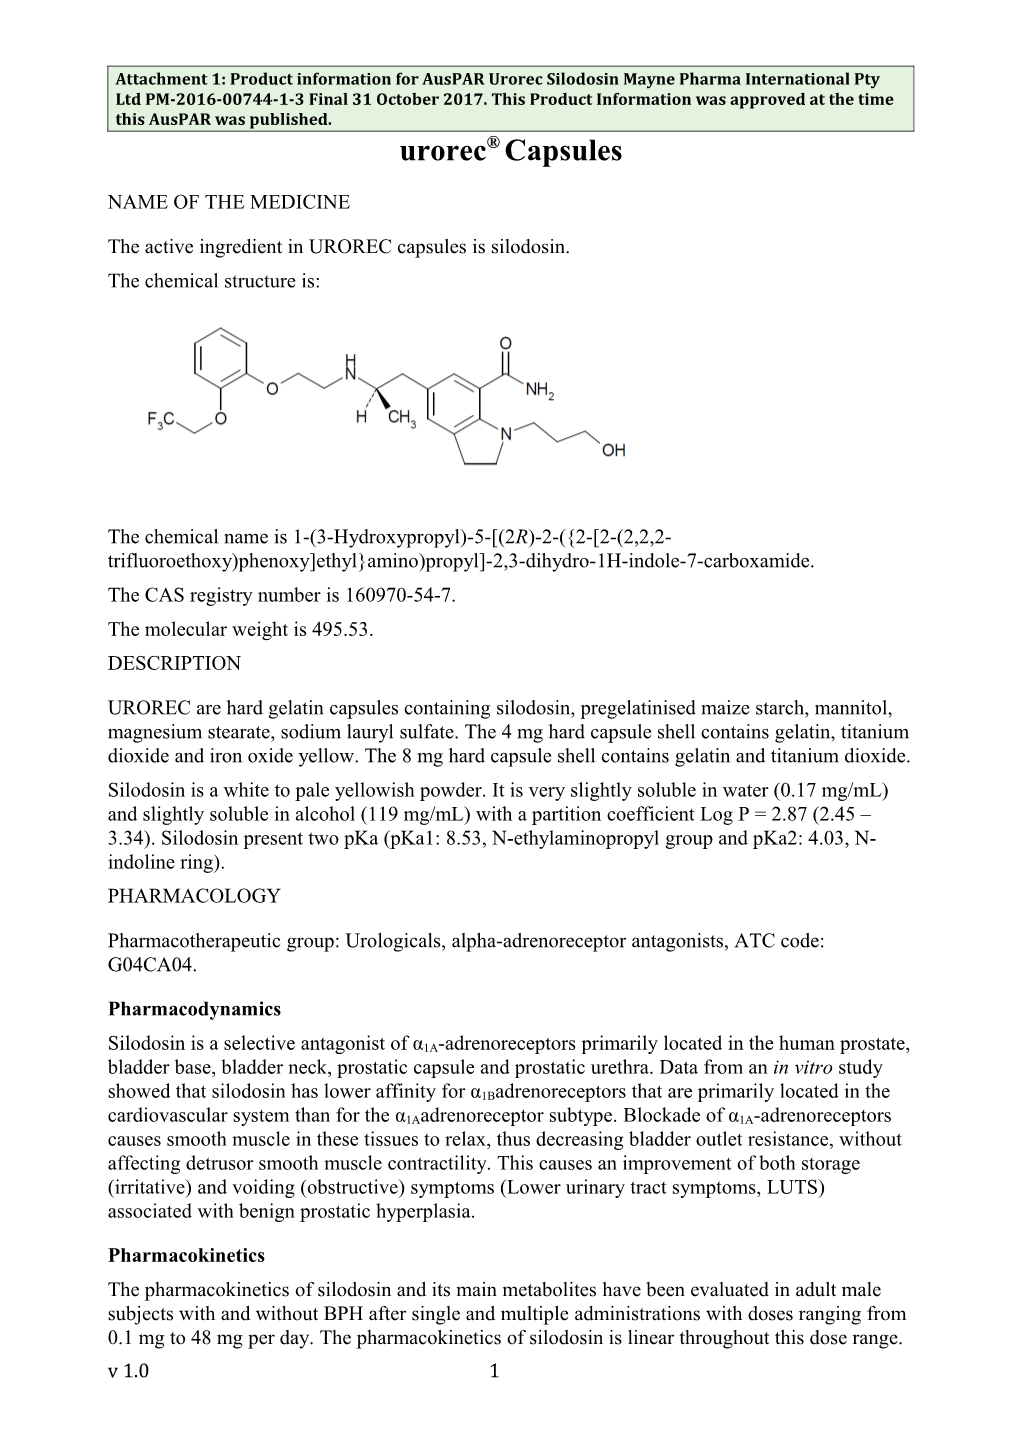 Auspar Attachment 1: Product Information for Silodosin